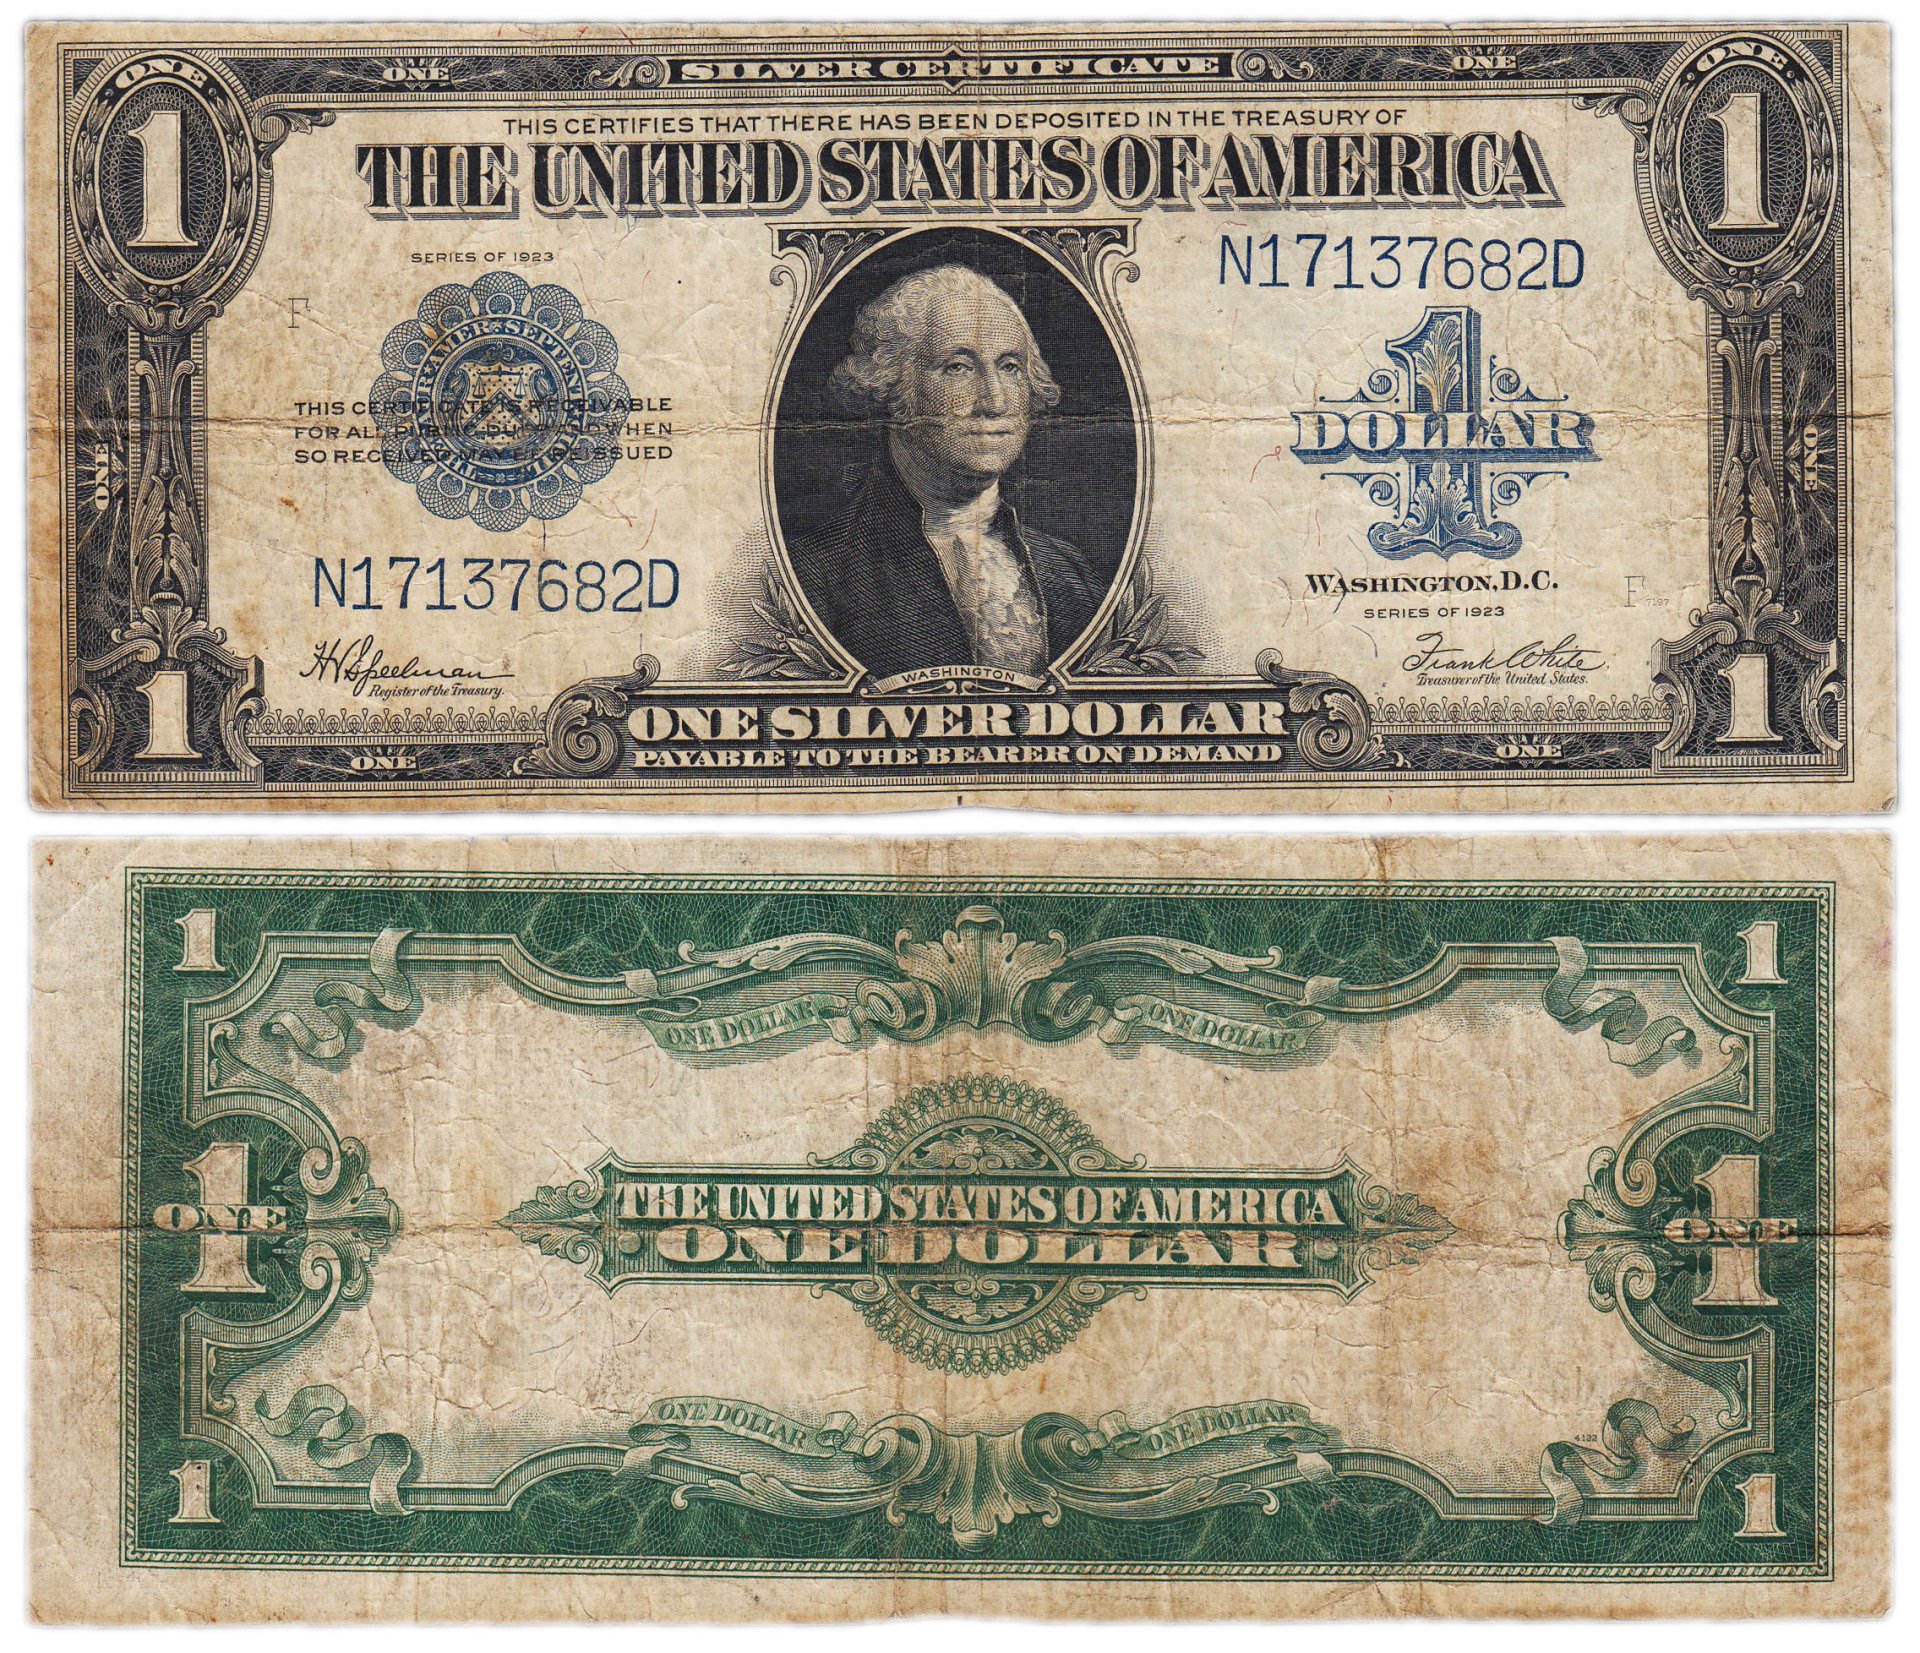 1 июля доллар. Купюра 1 доллар США. Доллар купюра 1 доллар. Американская купюра 1 доллар. Банкнота доллар США 1928.